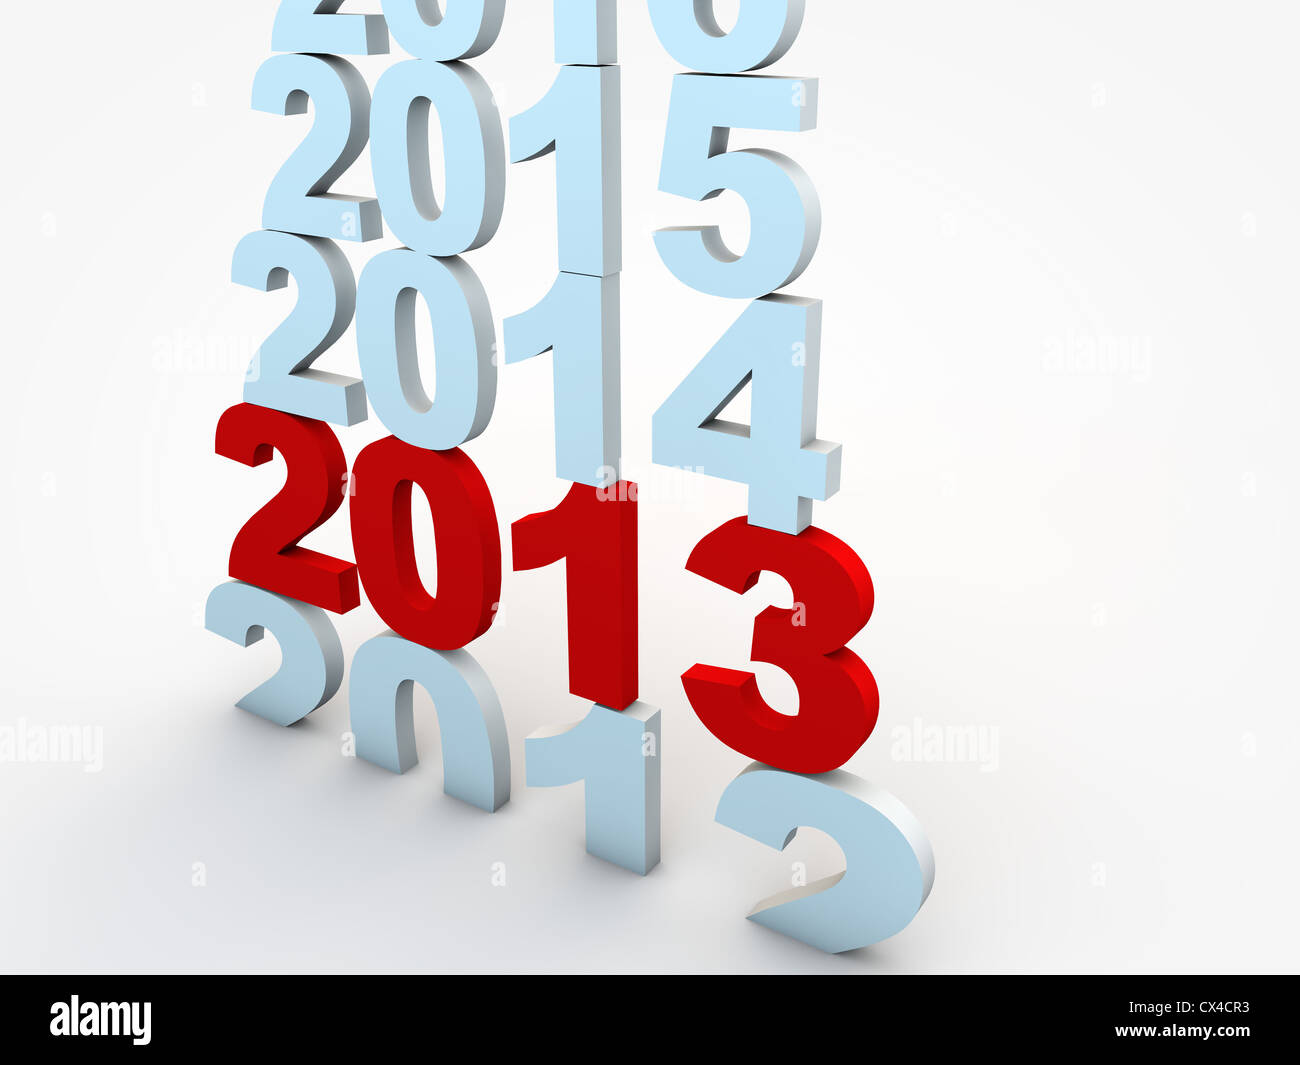 New Year Eve 2013 Stock Photo